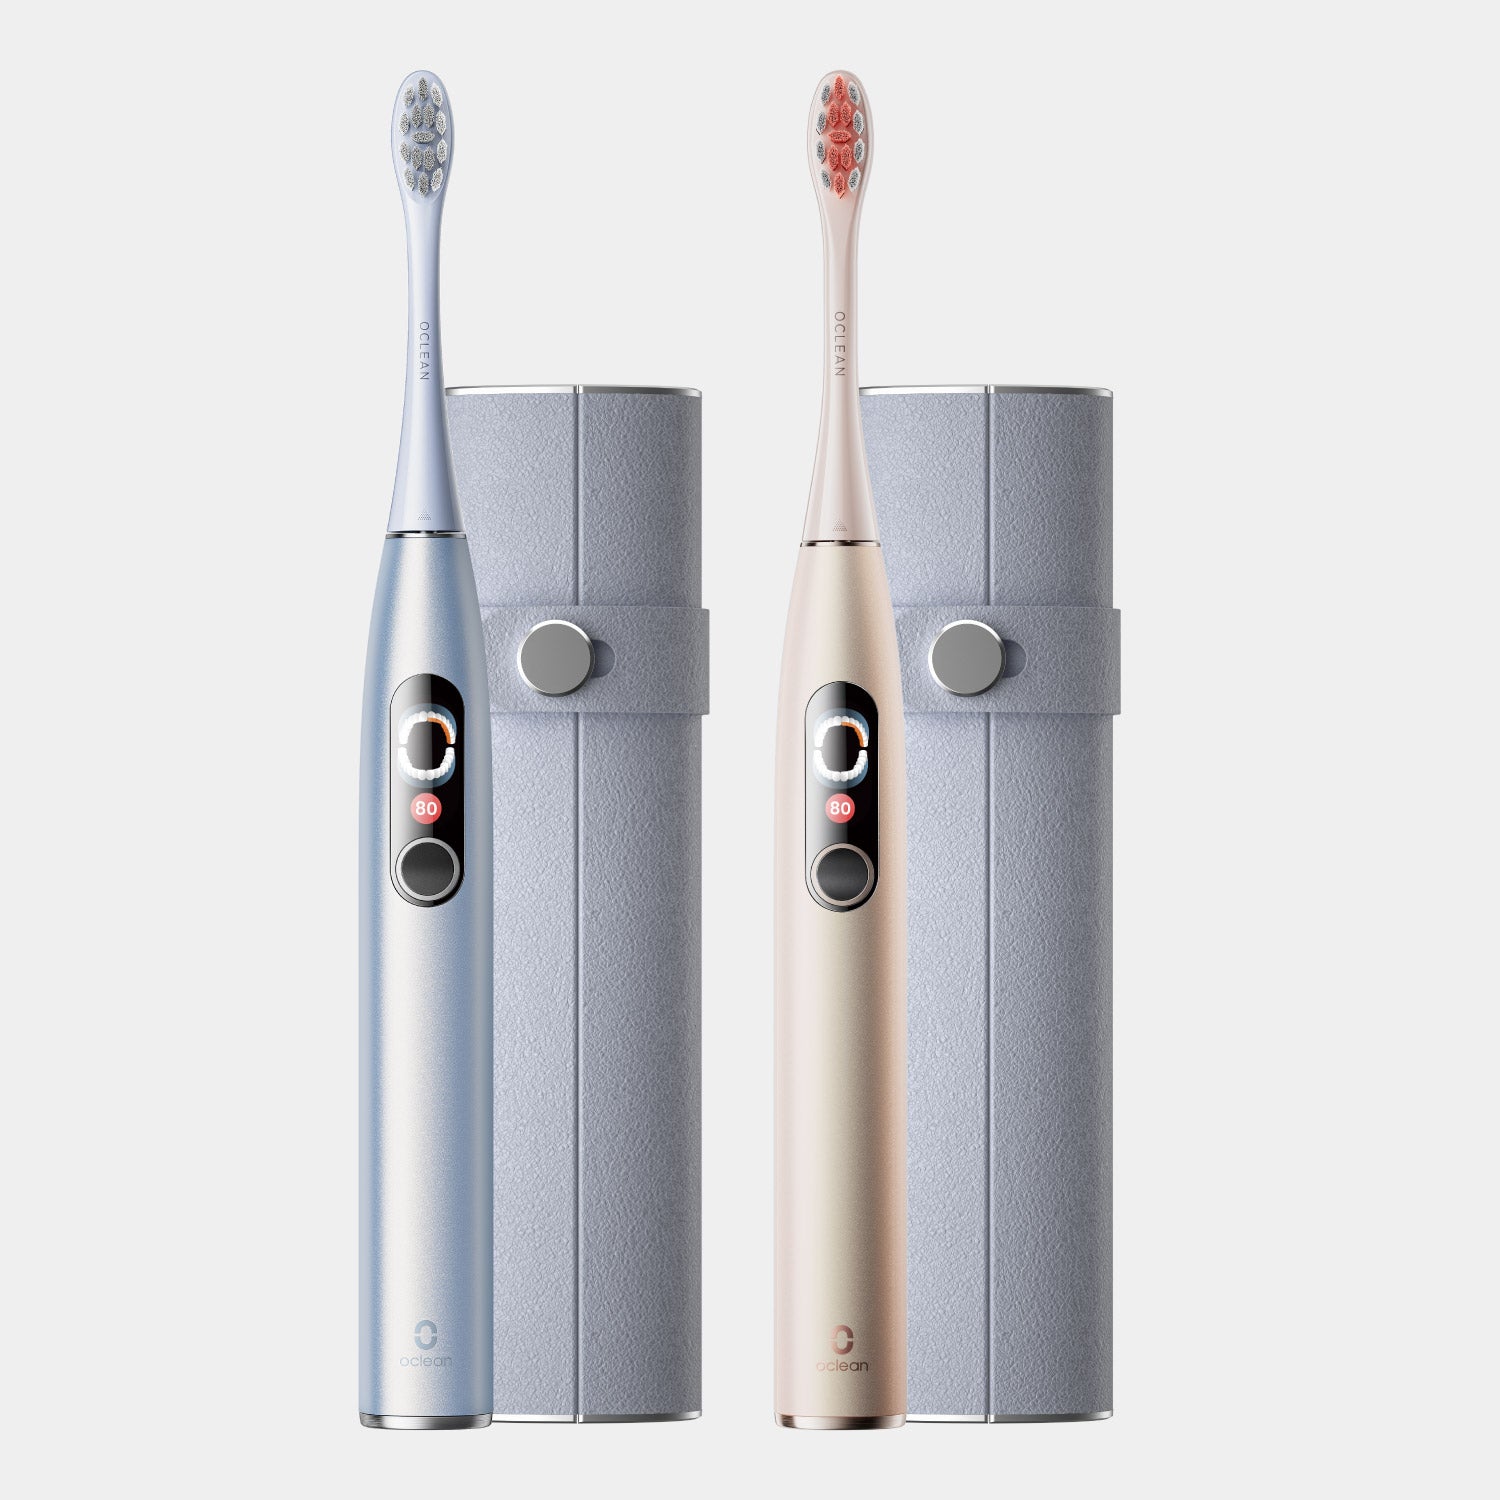 "Oclean X Pro Digital Premium Set Sonic Electric Toothbrush-Toothbrushes-Oclean US Store